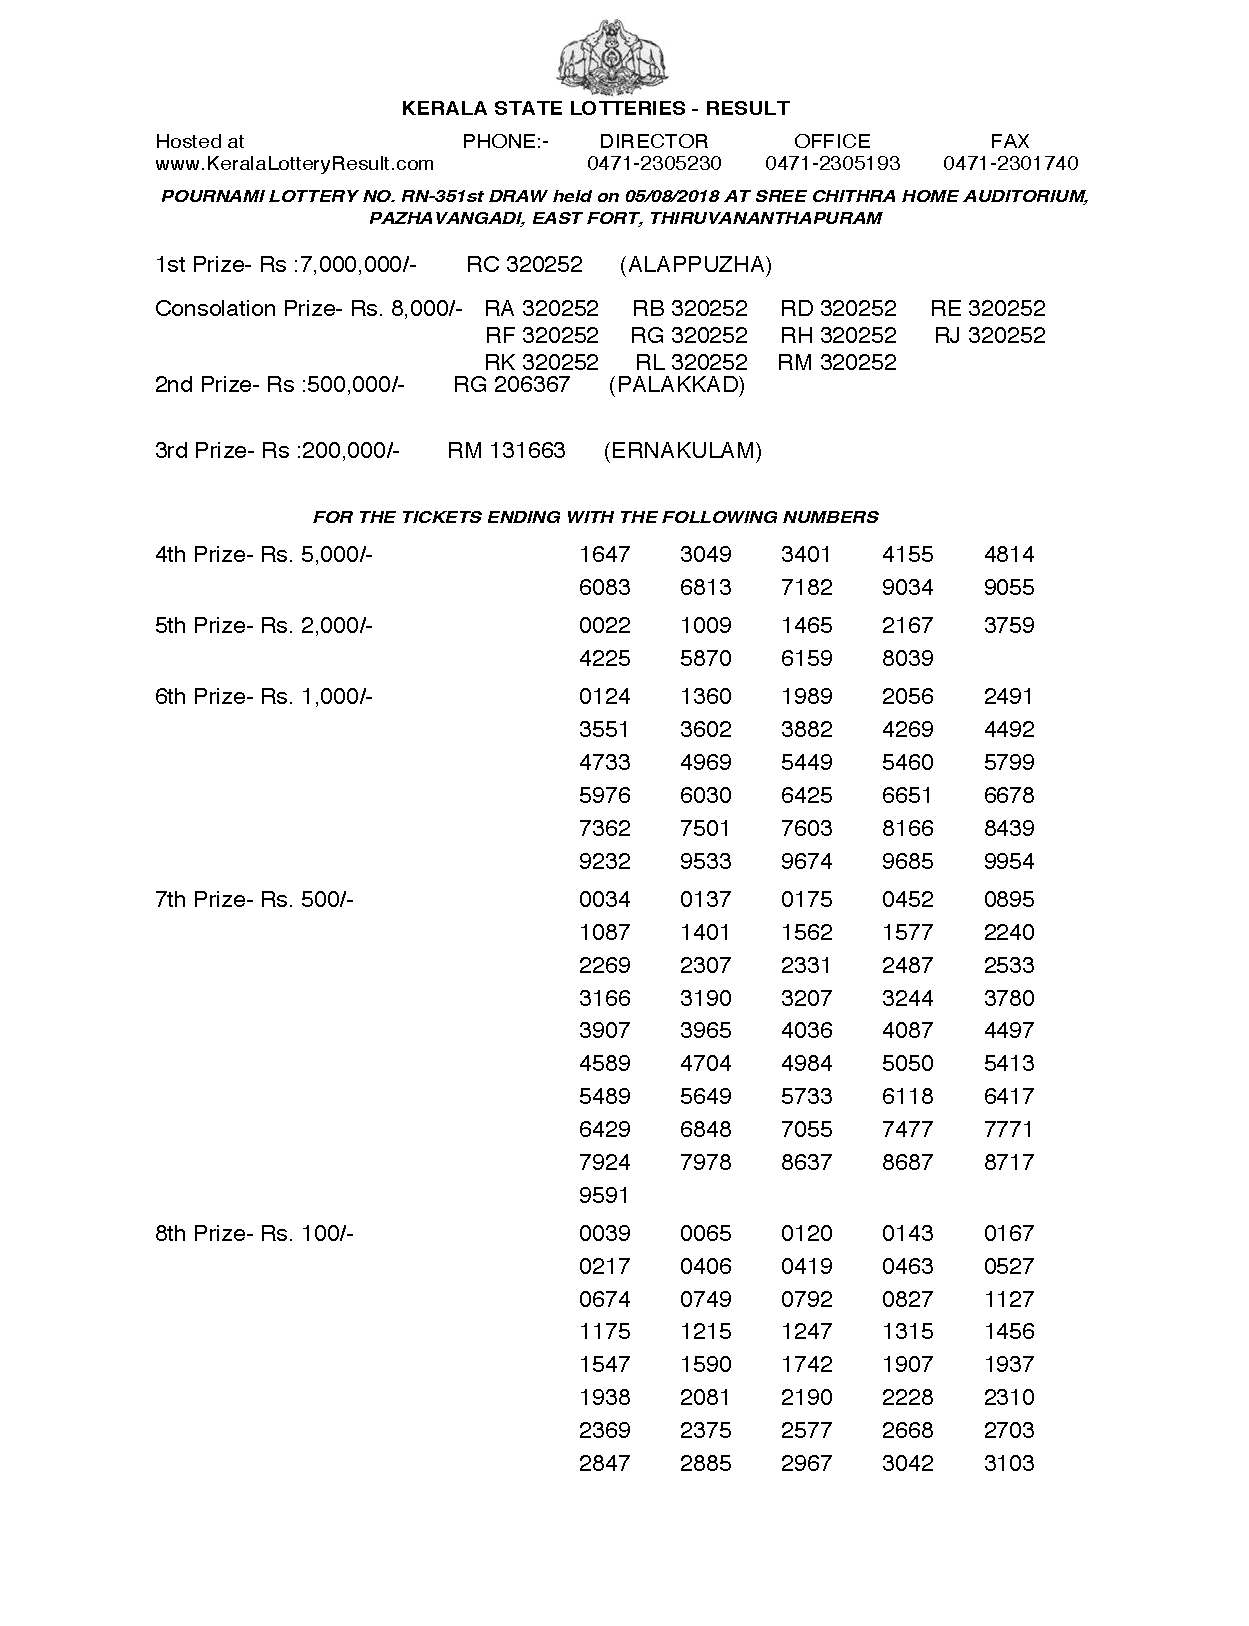 Pournami RN351 Kerala Lottery Results Screenshot: Page 1